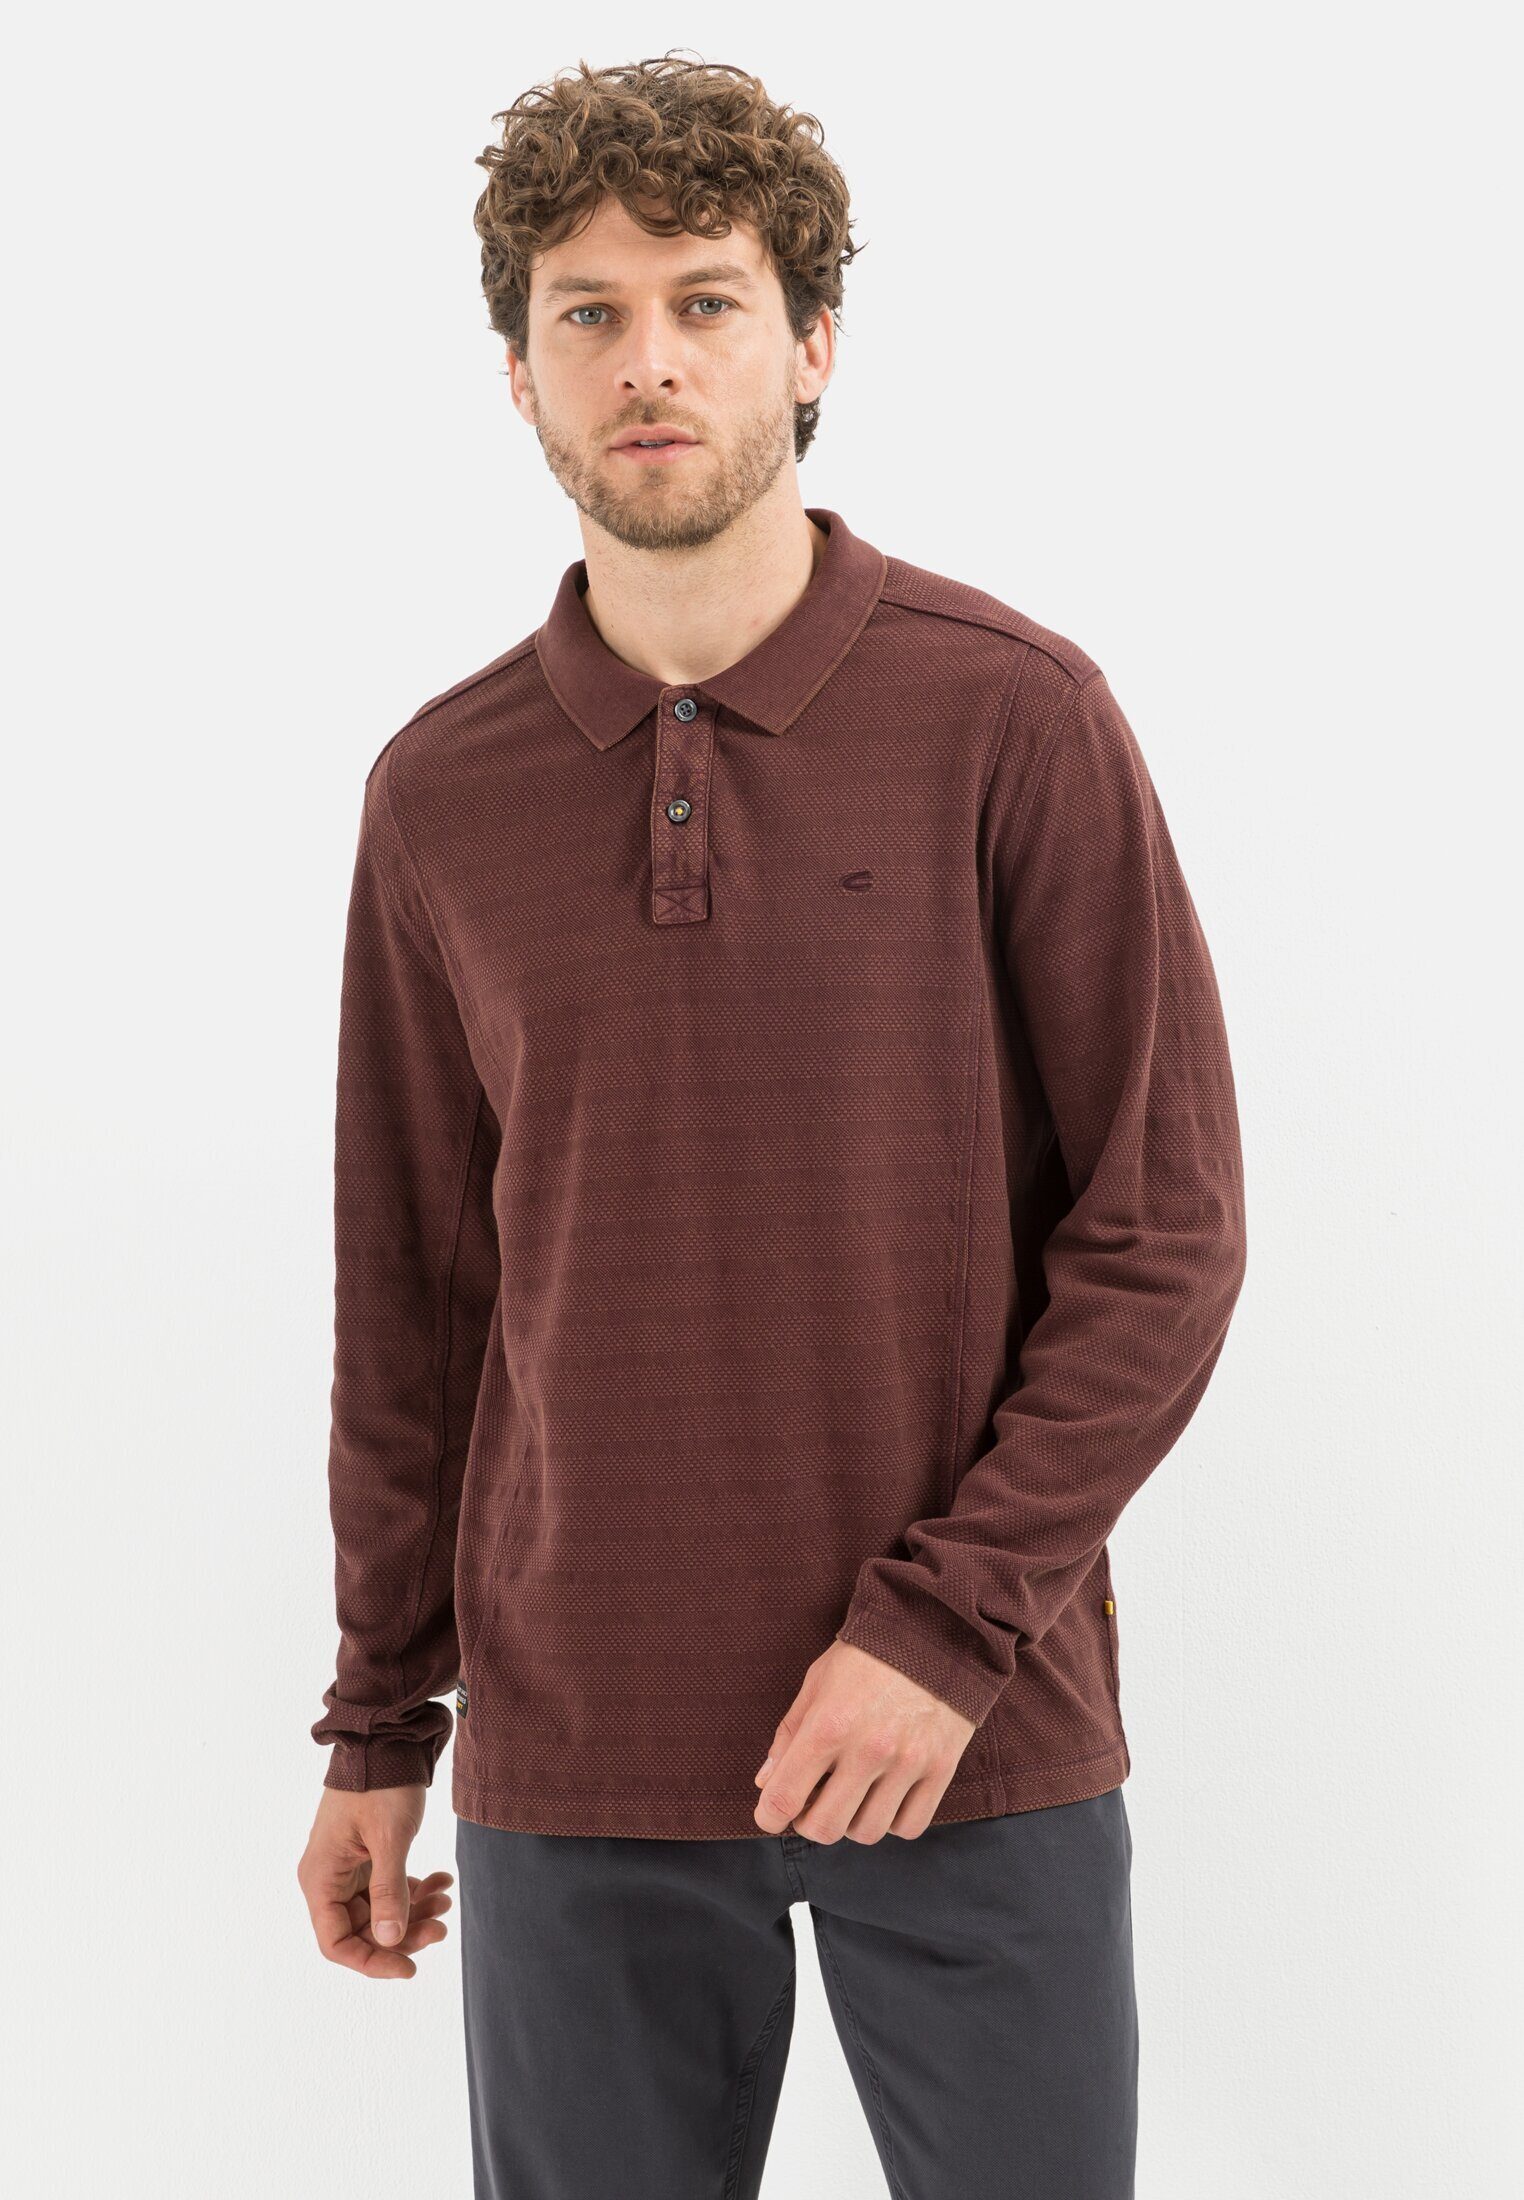 Shirts_Langarm-Poloshirt reiner Rot Poloshirt aus Baumwolle camel active